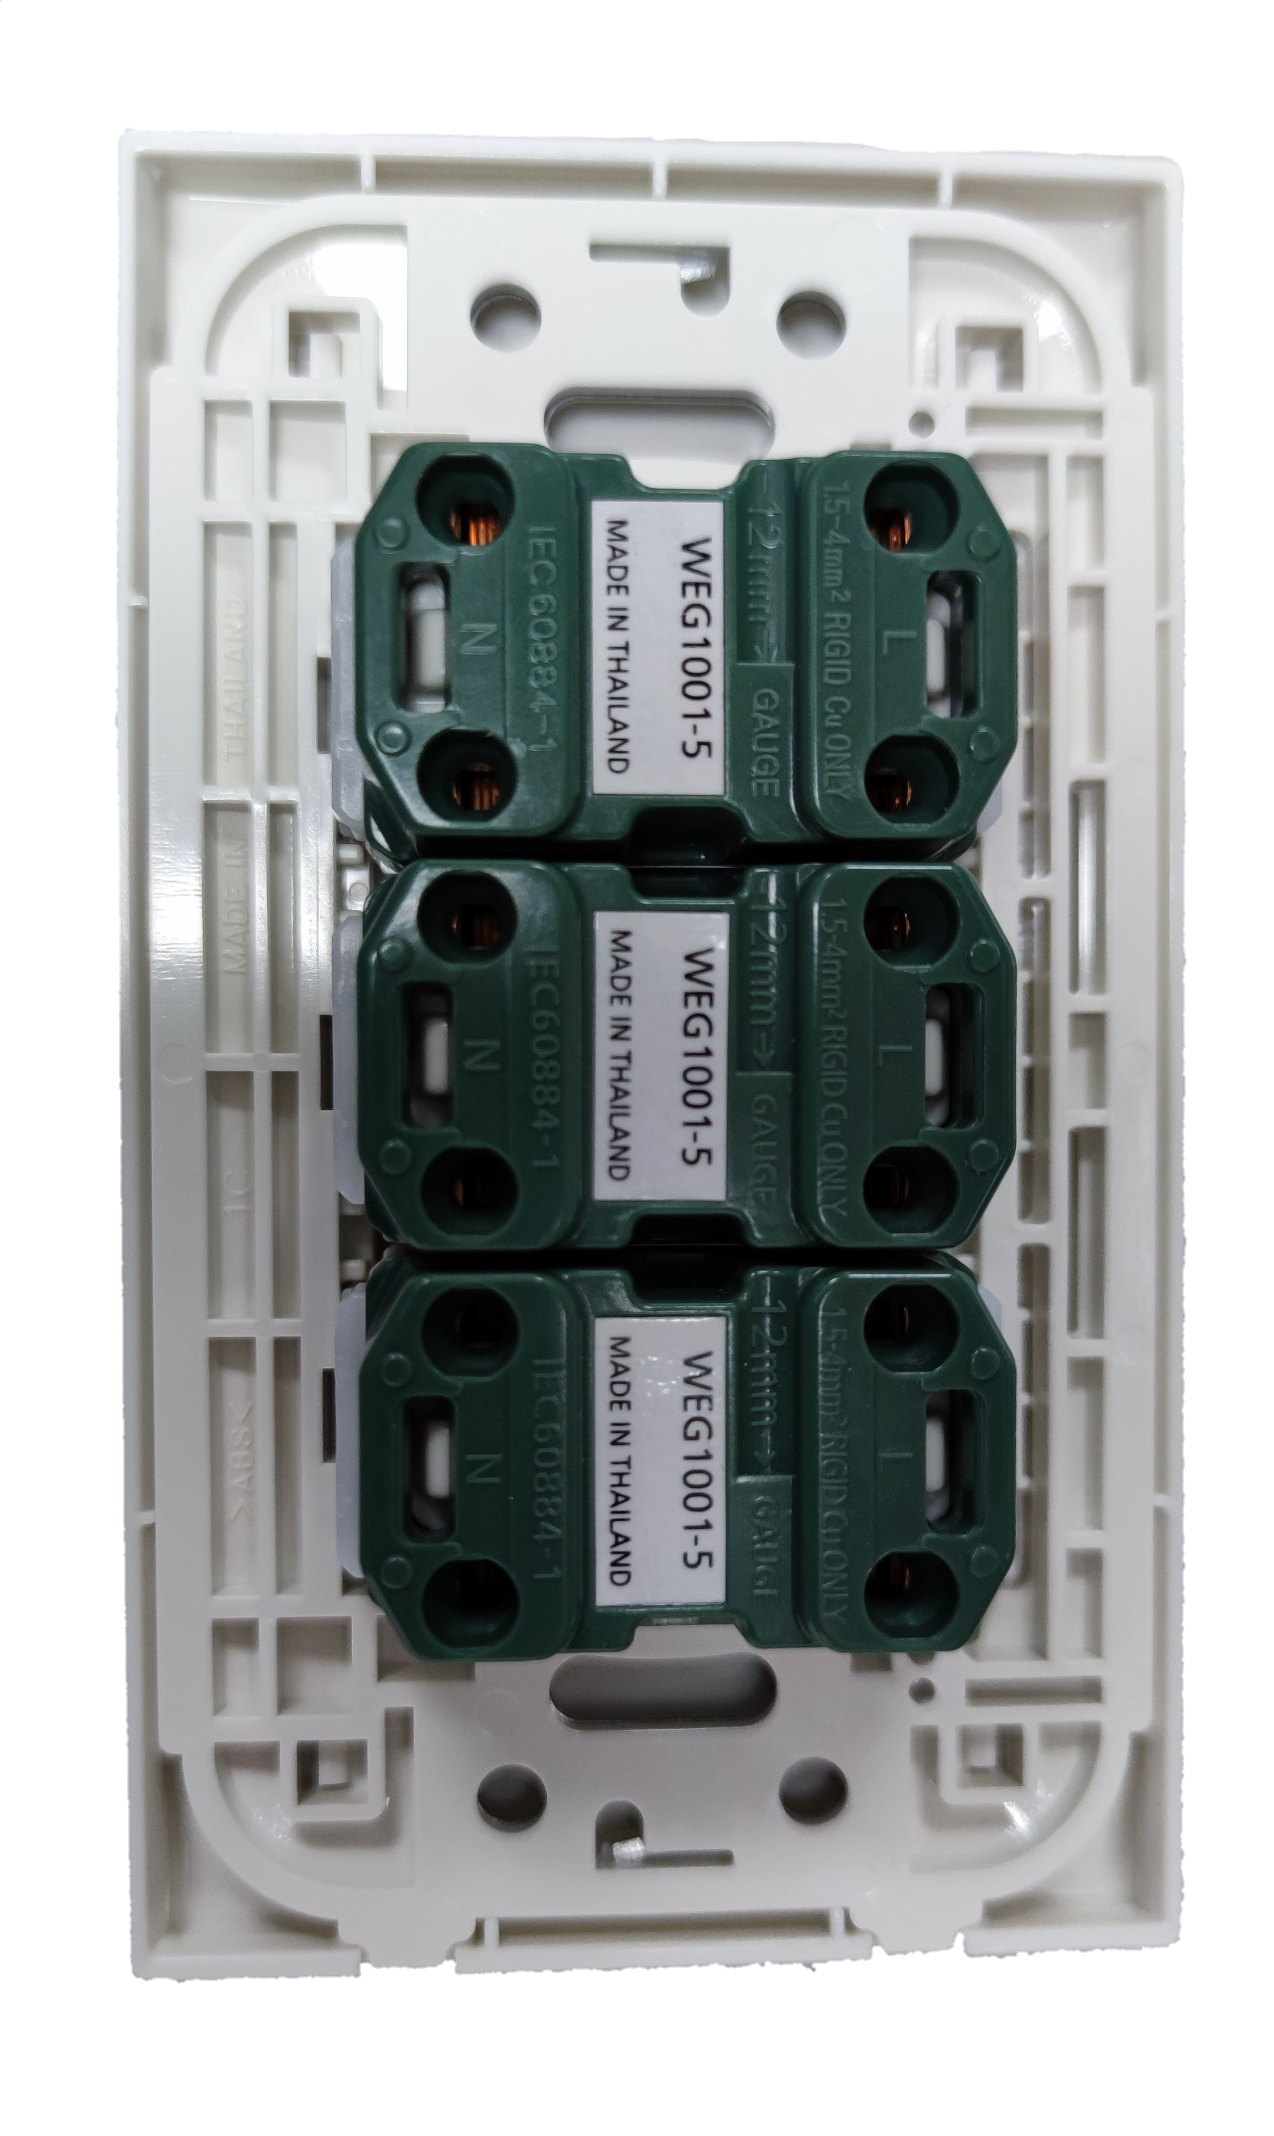 2 Gang Outlet, Convenience Outlet Flat Pin, C.O. Outlet Wall Outlet  WEG1001-5 / WEG6802 ( Panasonic)